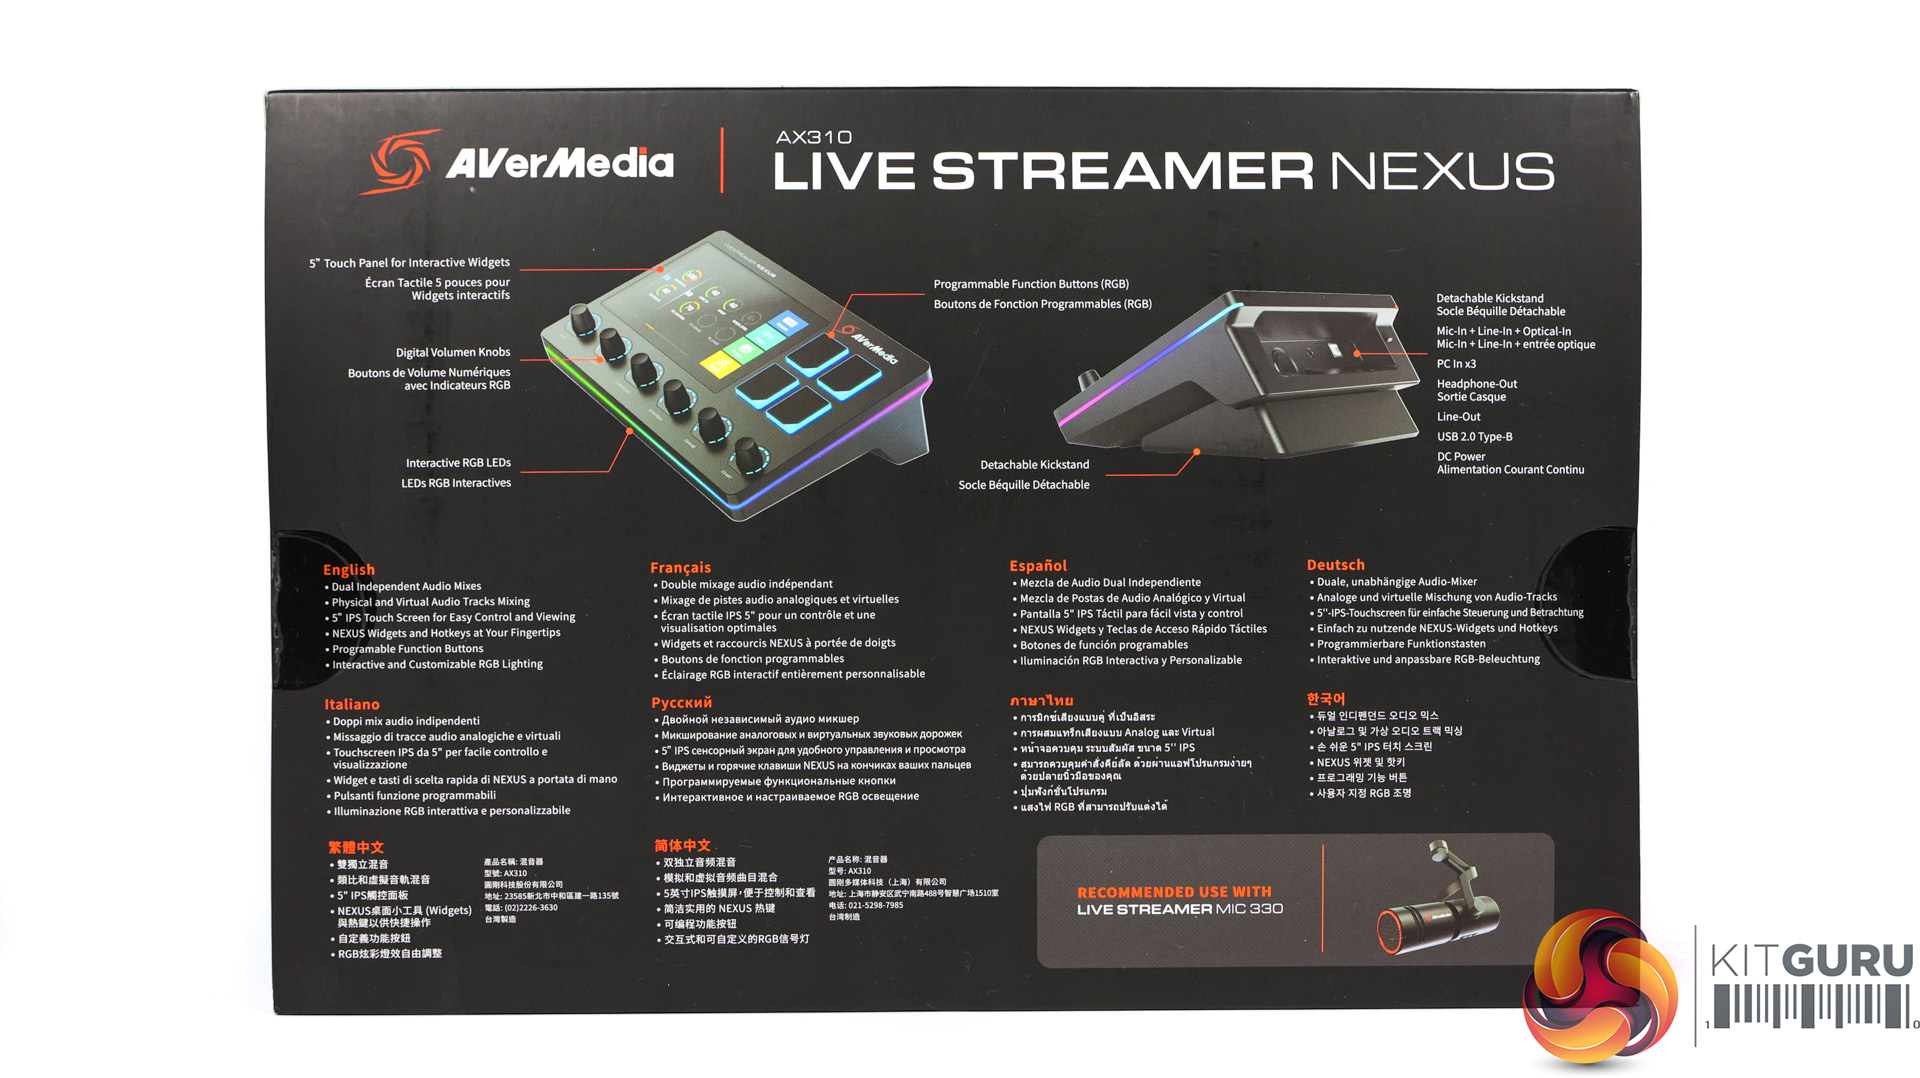 AVerMedia AX310 Live Streamer NEXUS Review